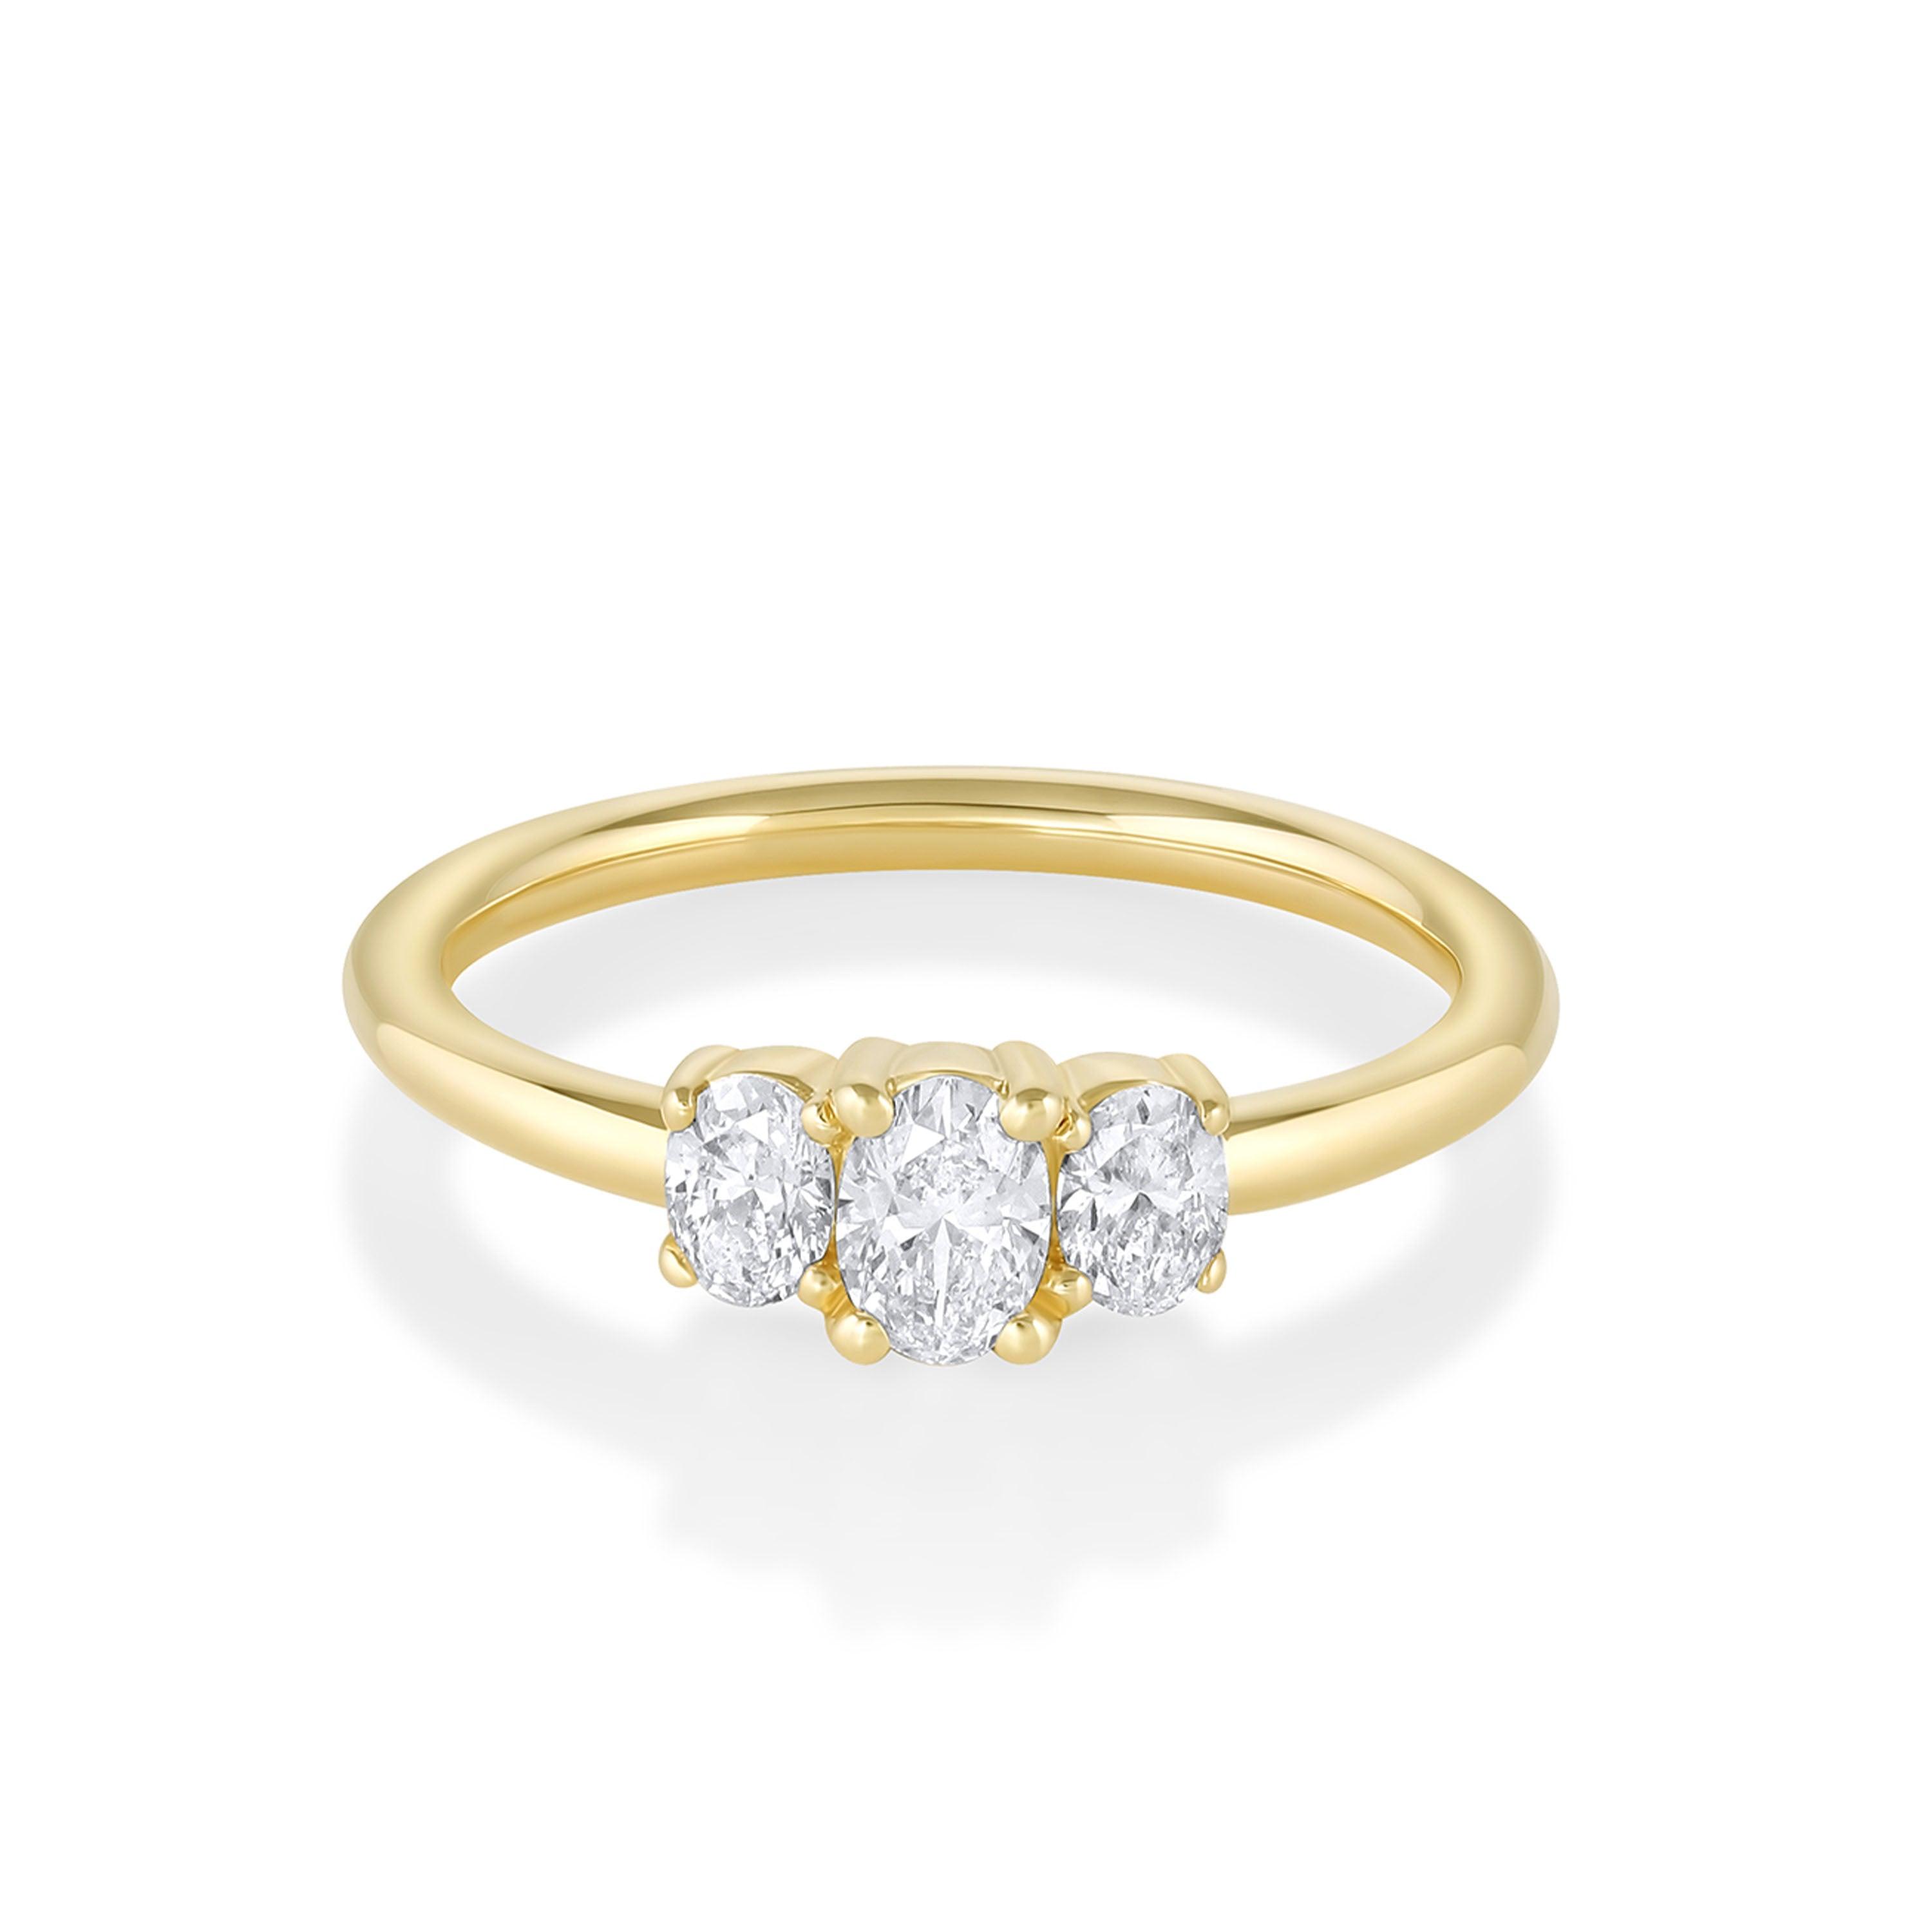 Michelle 14k Gold Band Ring White Diamond - 8